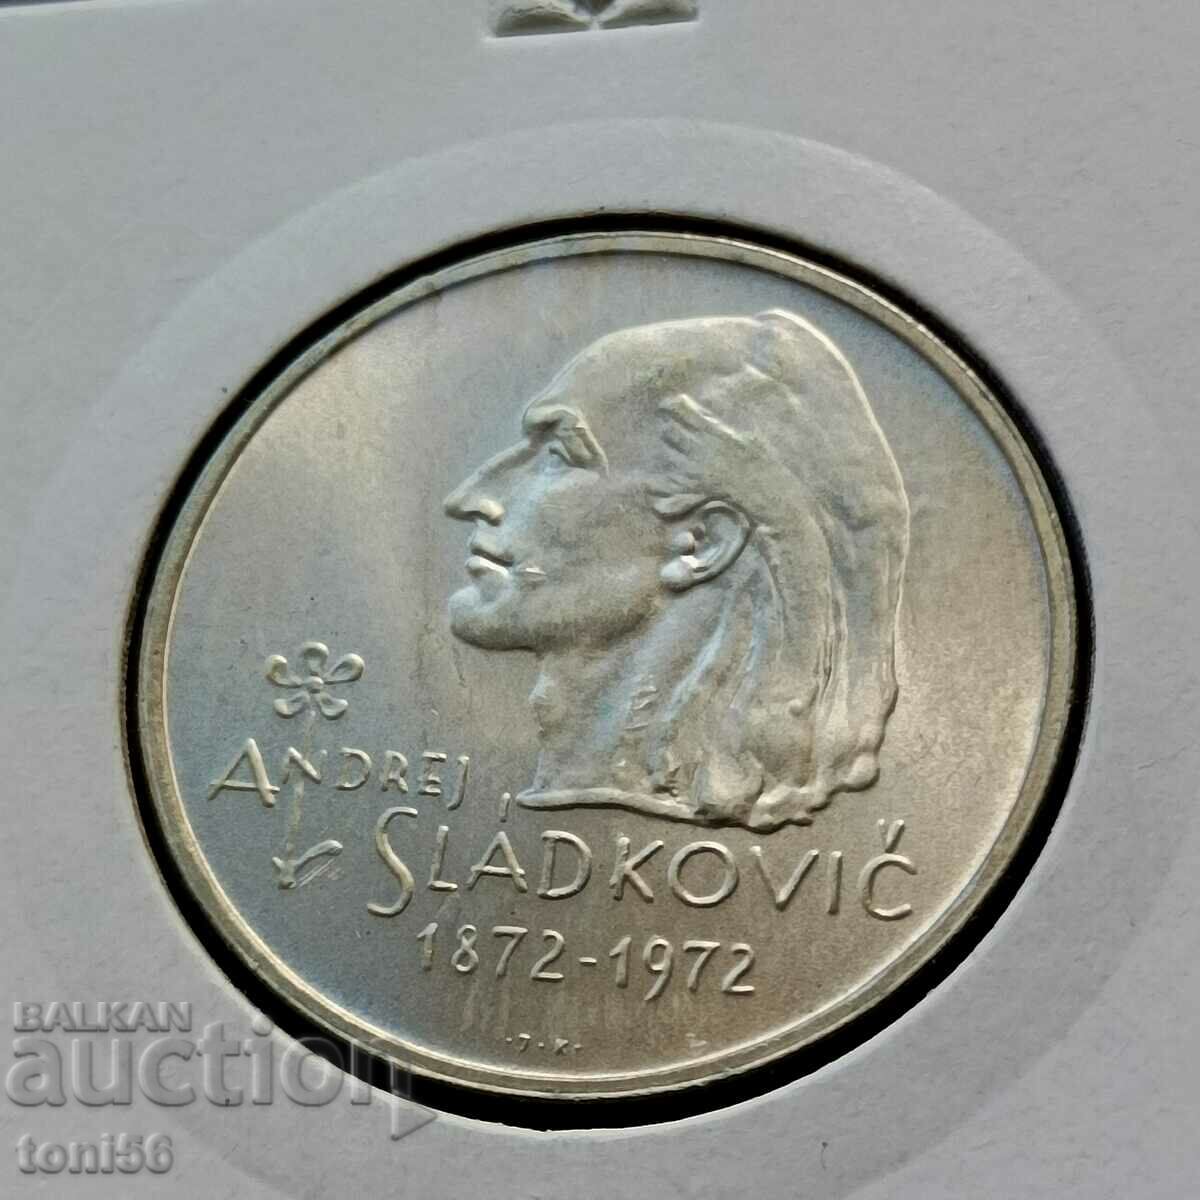 Cehoslovacia 20 coroane 1972 UNC - Argint